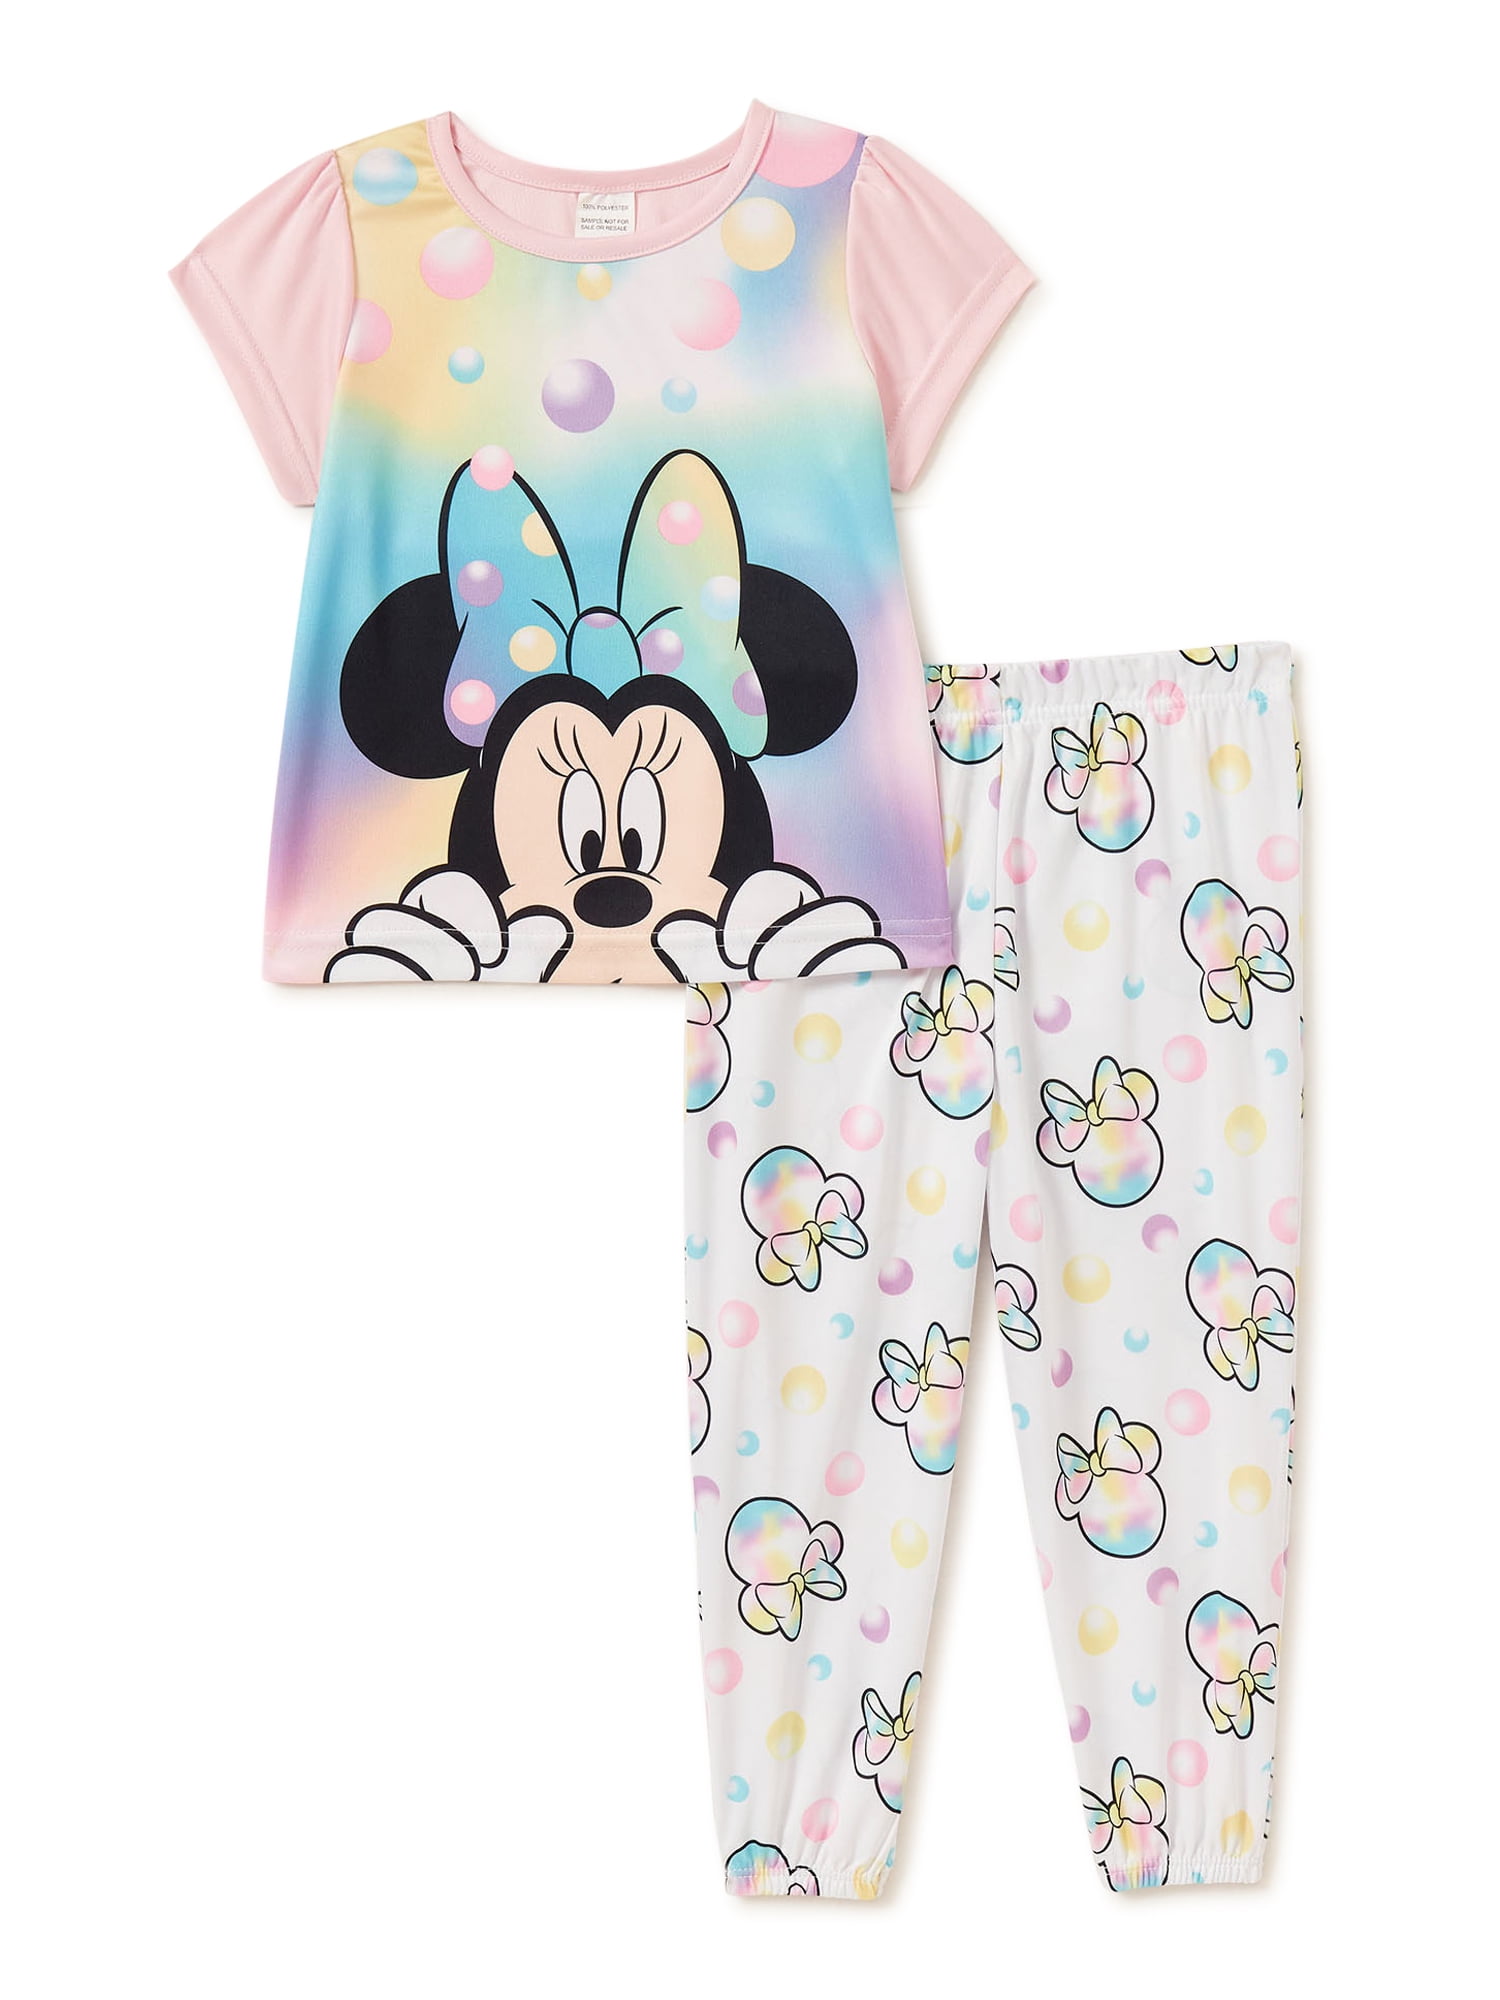 Size 4T Pink Toddler Girls' 2 piece Minnie Mouse Pajama Set